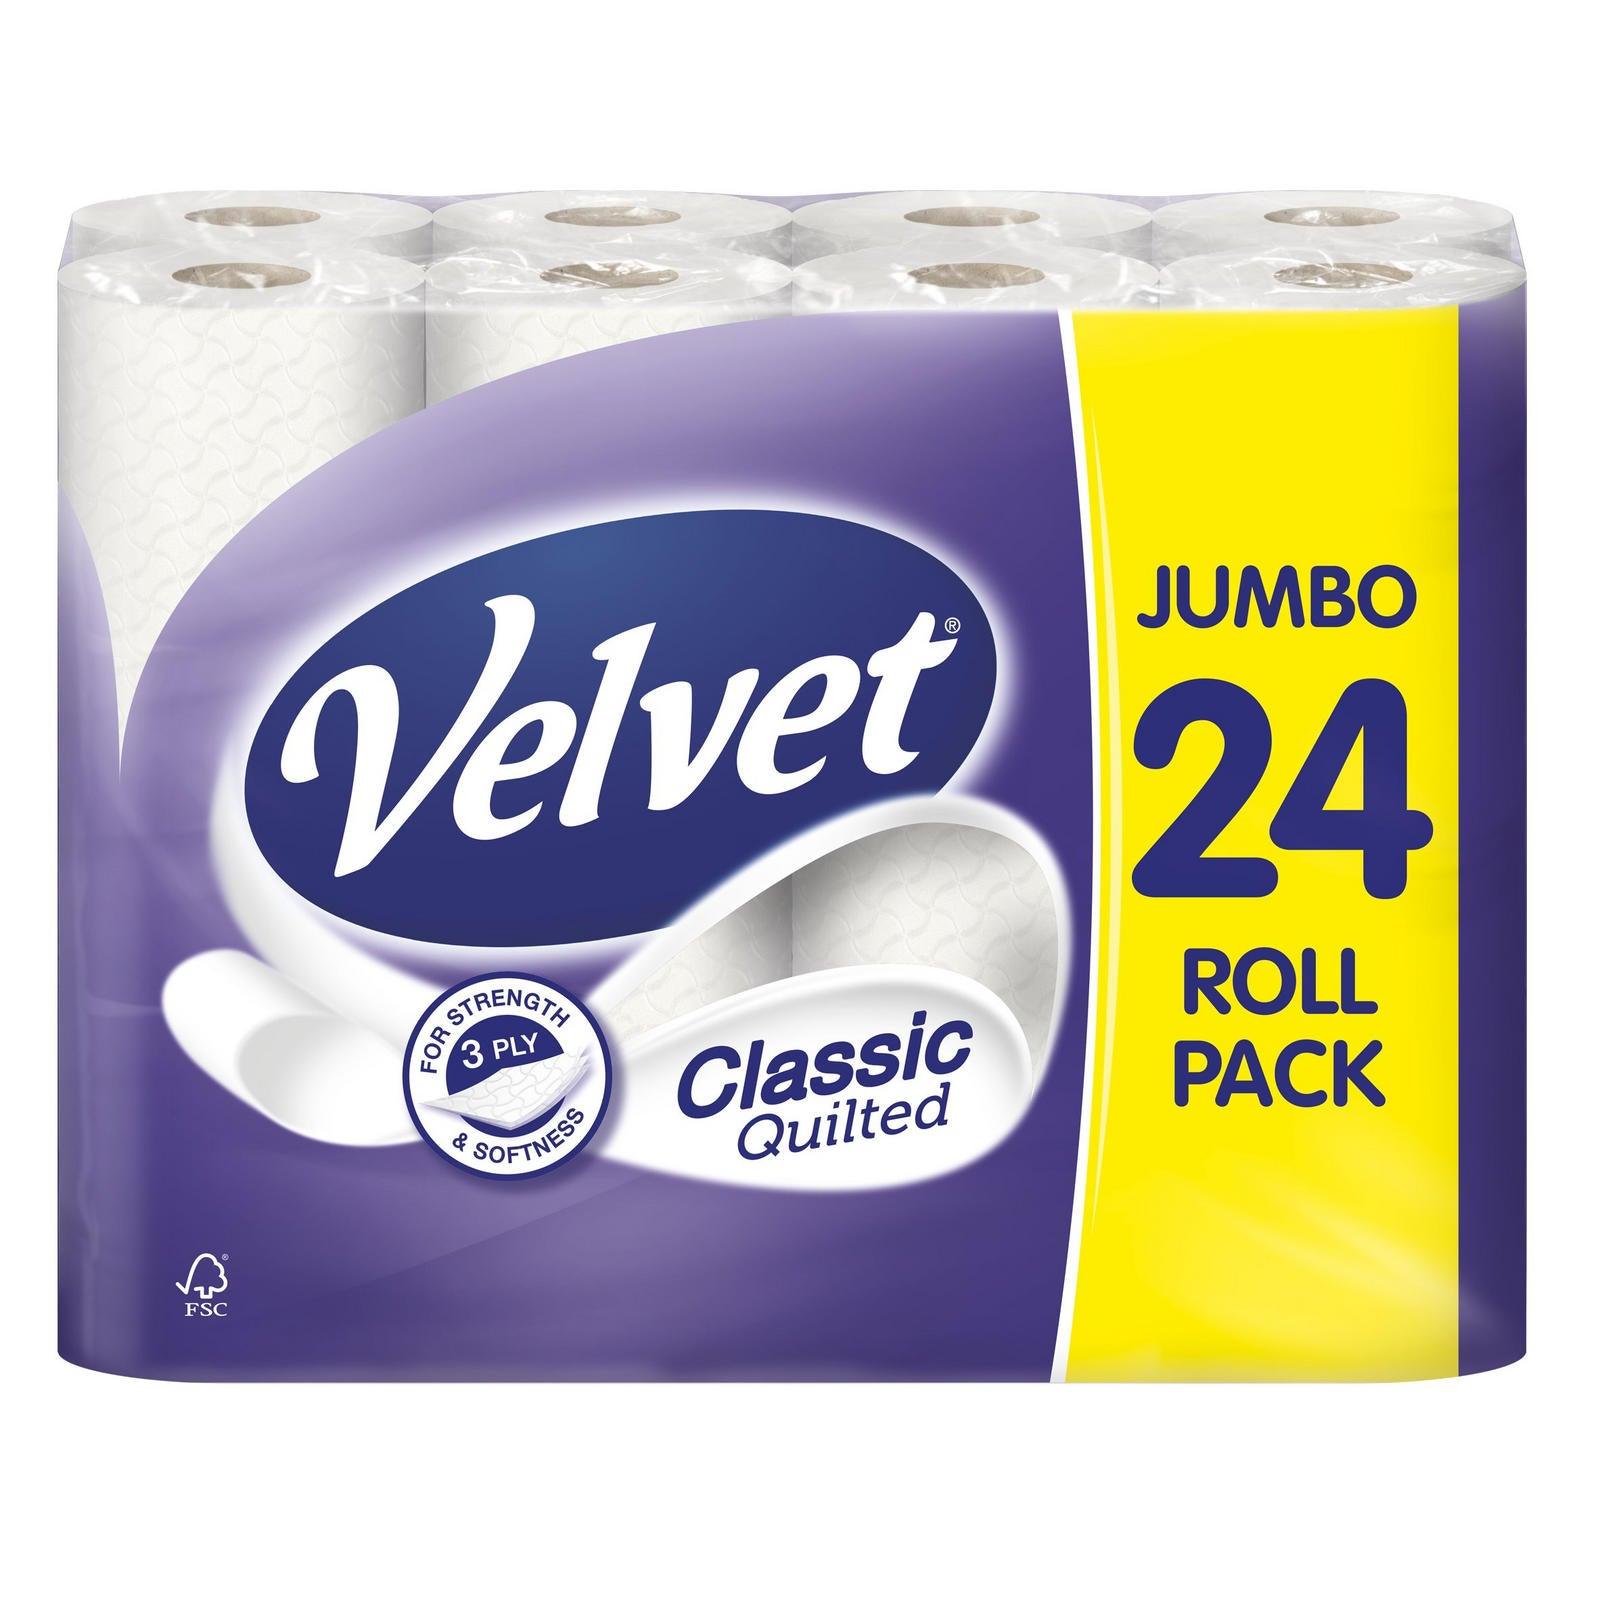 Velvet Comfort Quilted Toilet Roll - Pack of 24 - Vending Superstore